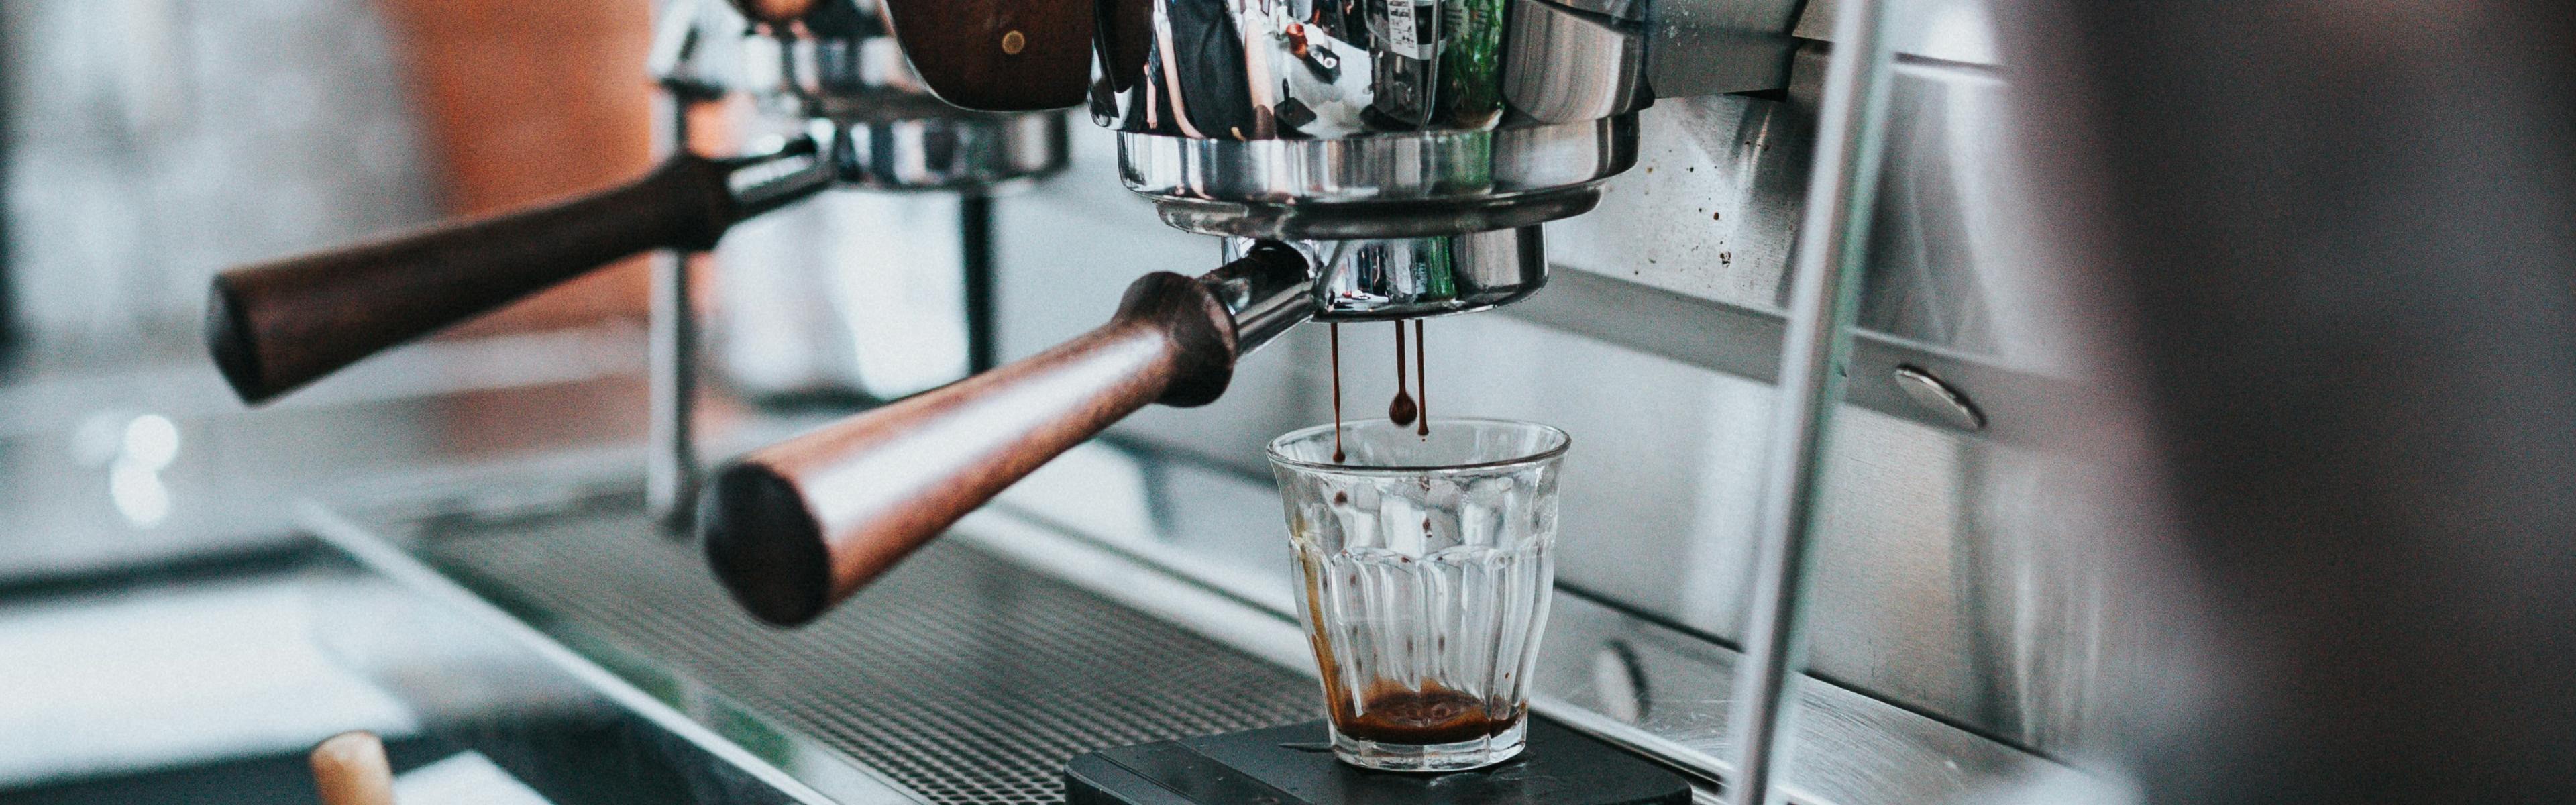 An espresso machine makes a shot into a glass cup.